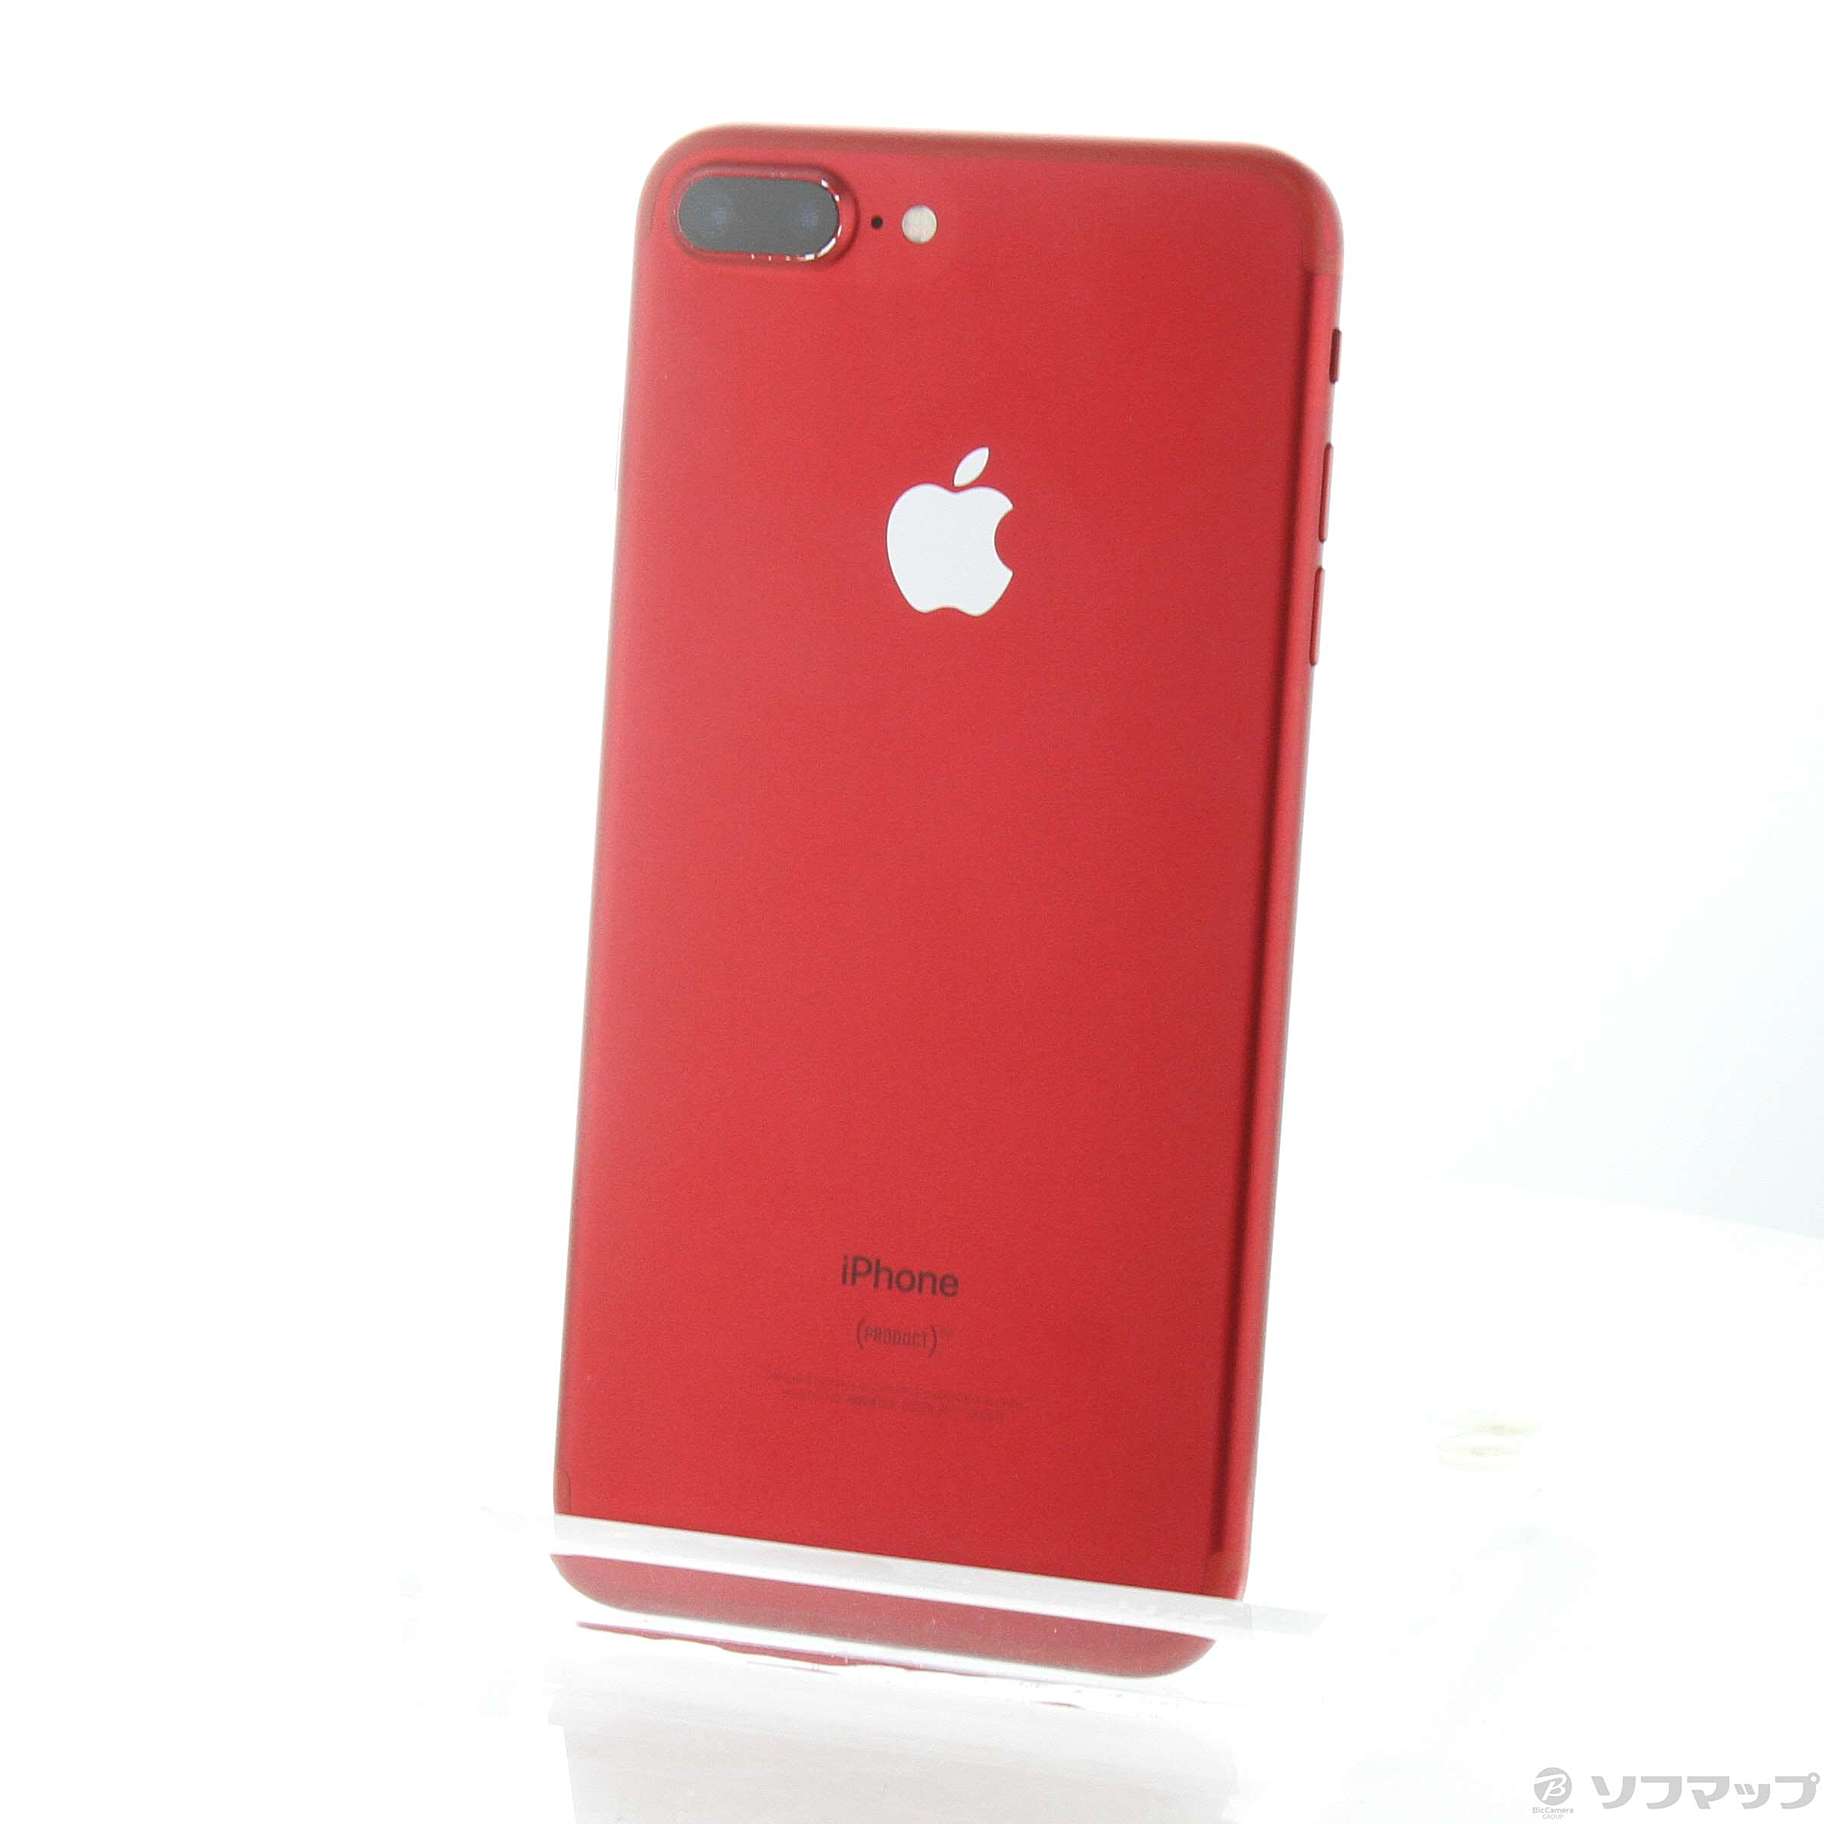 iPhone 7 Plus Red 128 GB SIMフリー